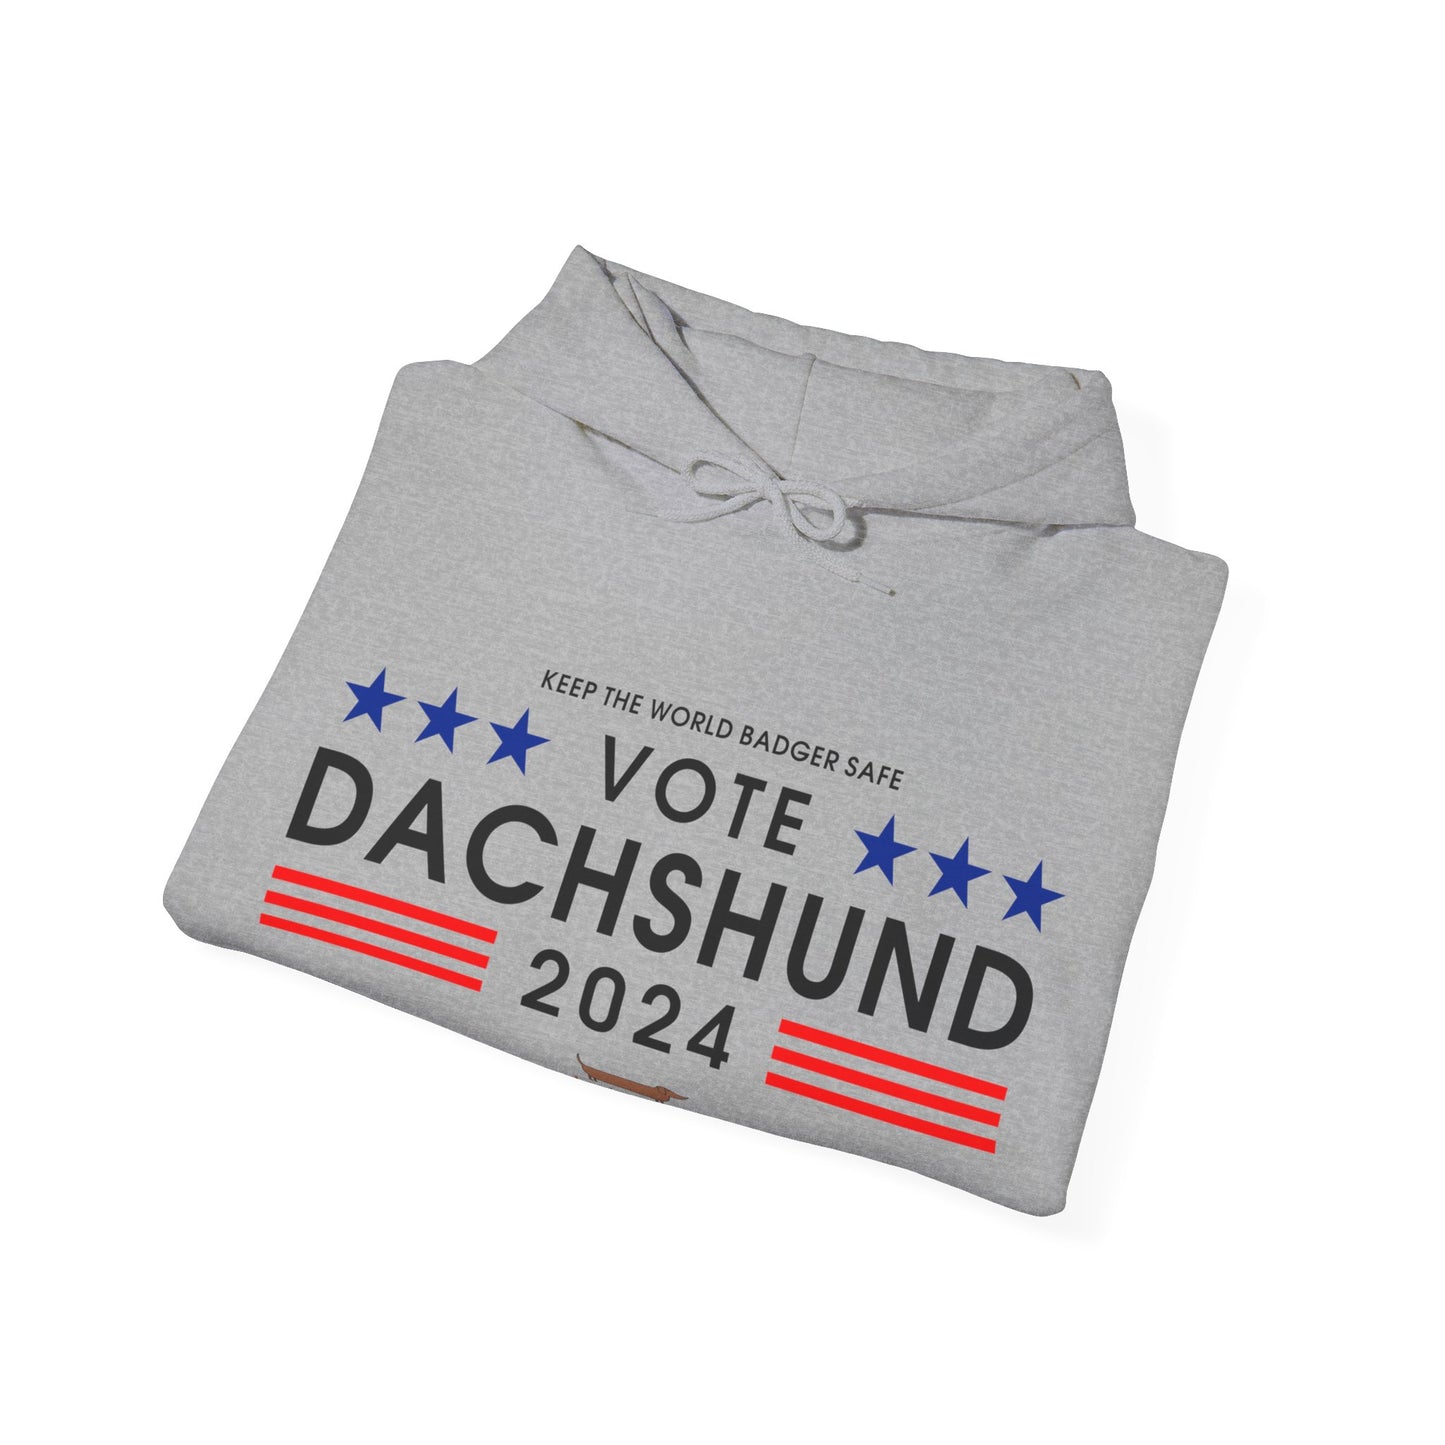 Vote Dachshund Hoodie Sweatshirt